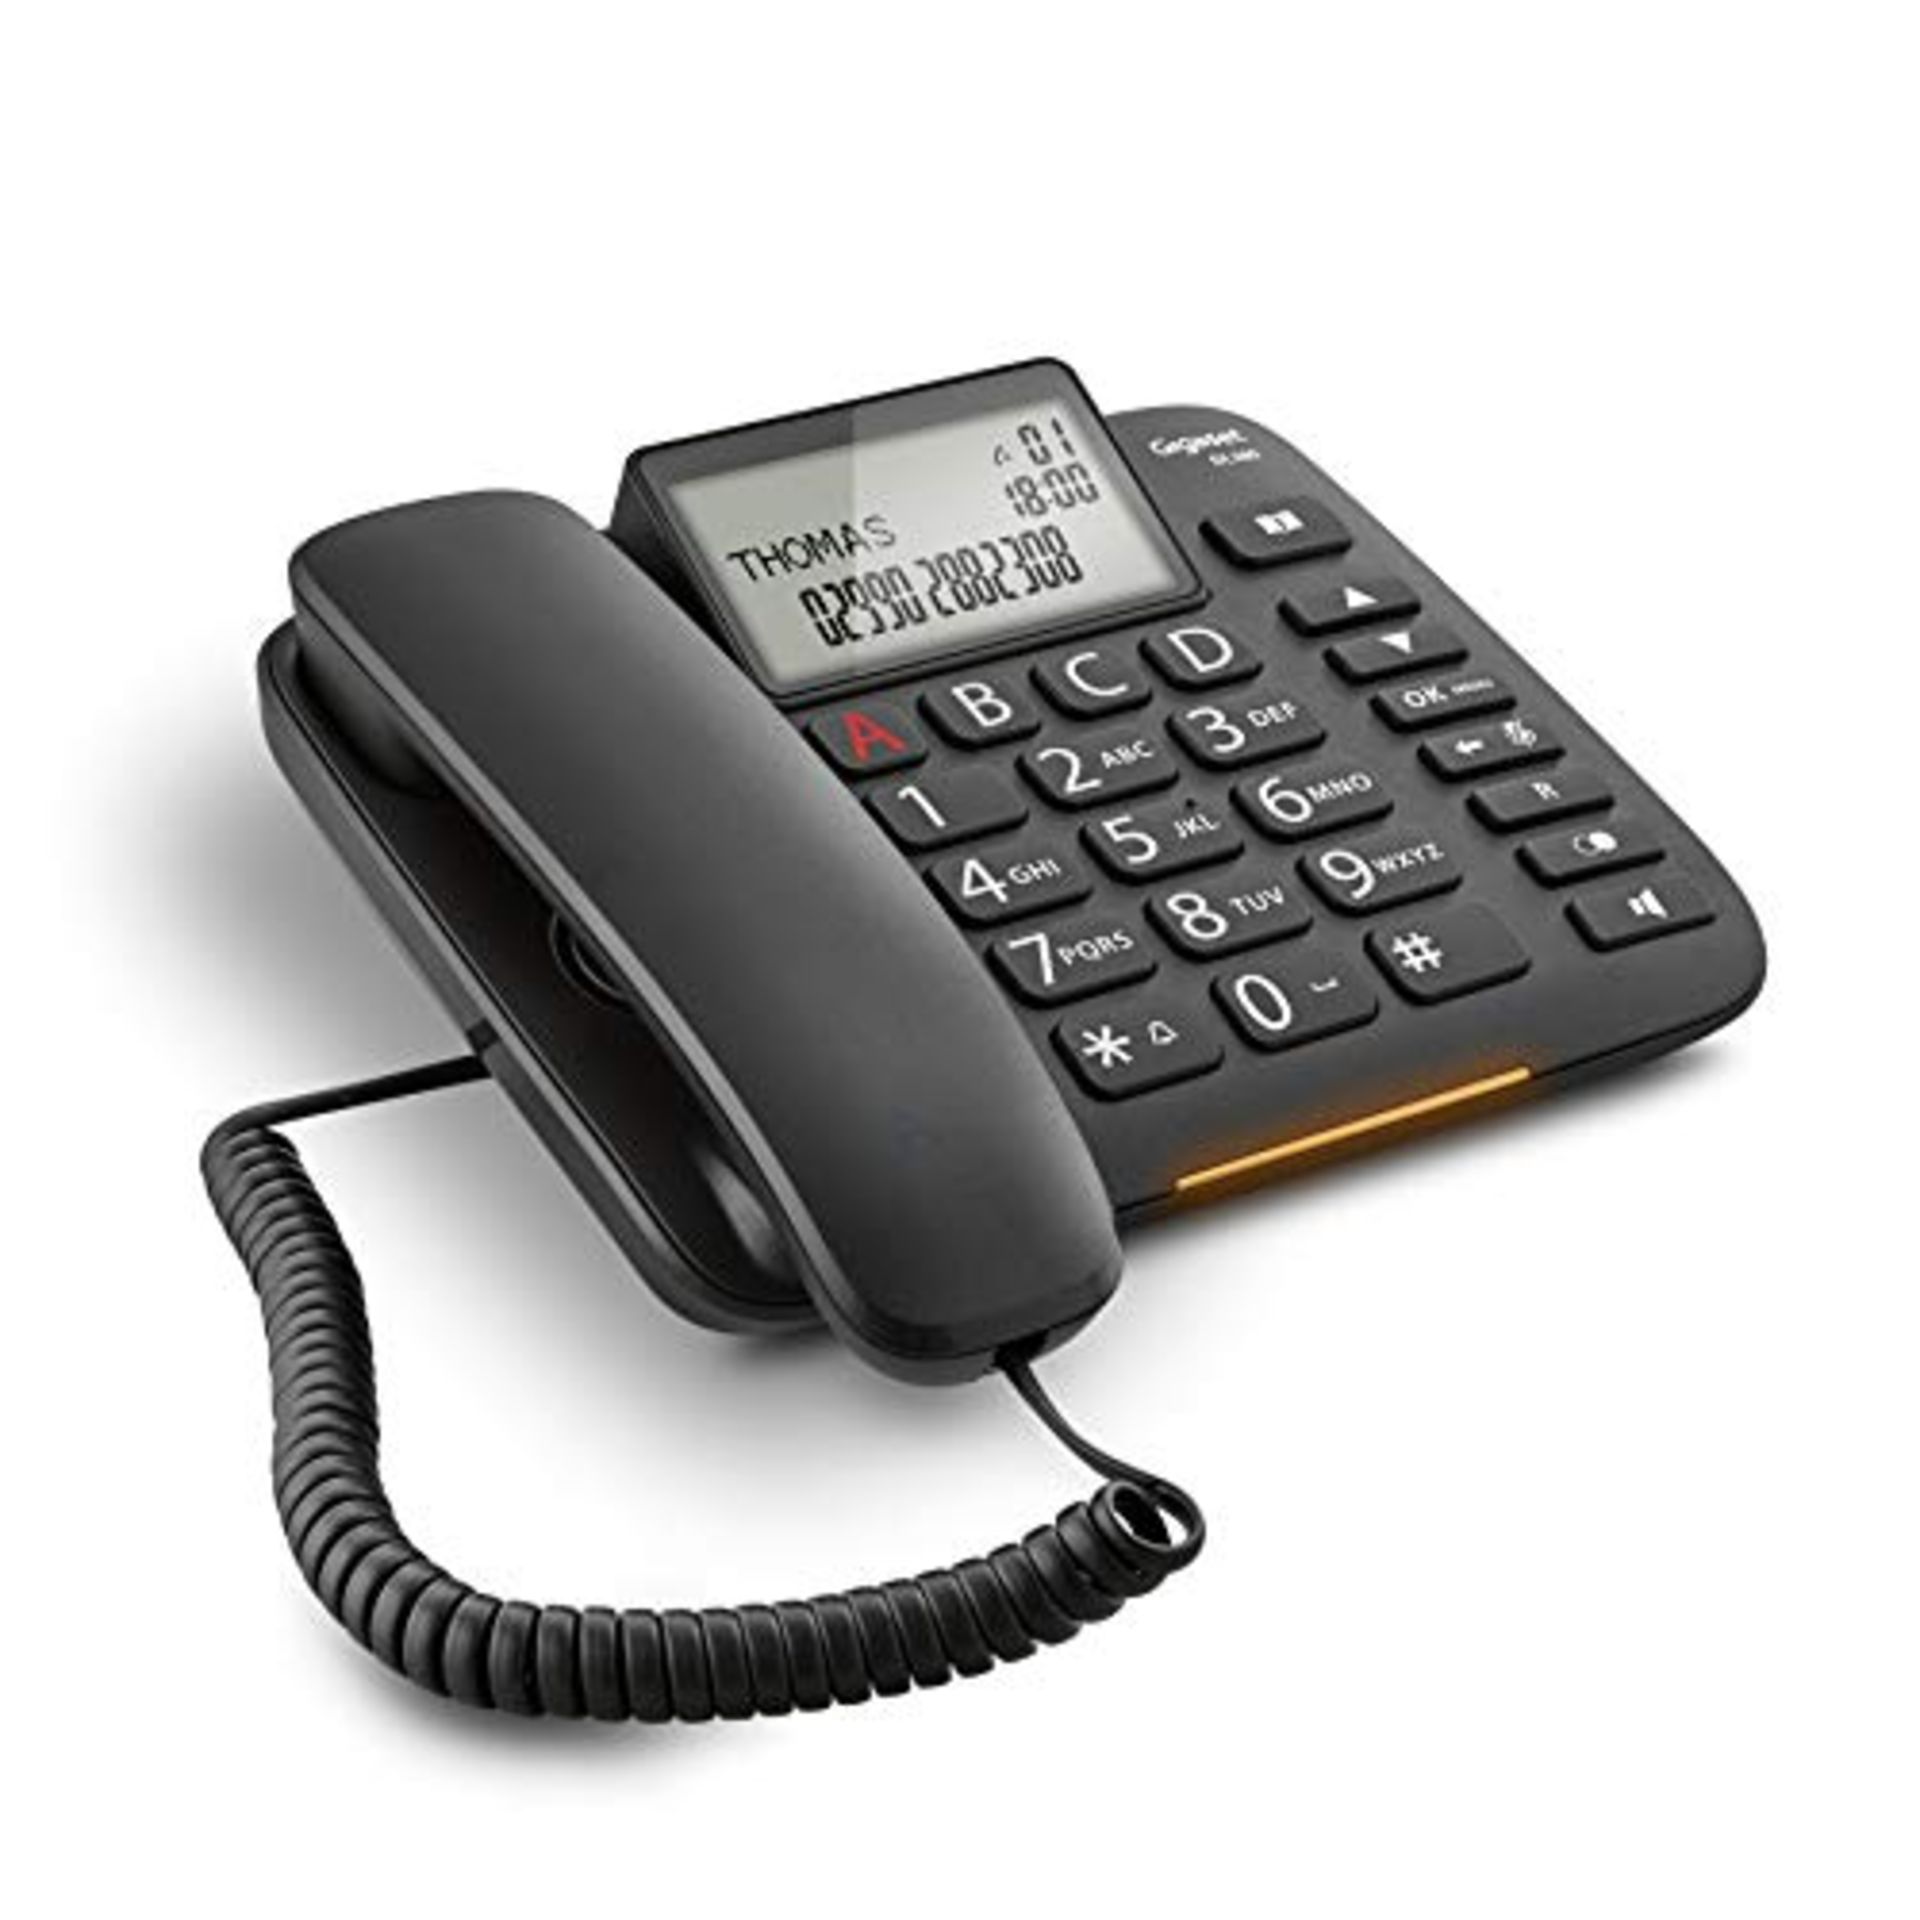 Gigaset DL380 Landline Telephone, Large Display, Large Ergonomic Keys, Call Display vi